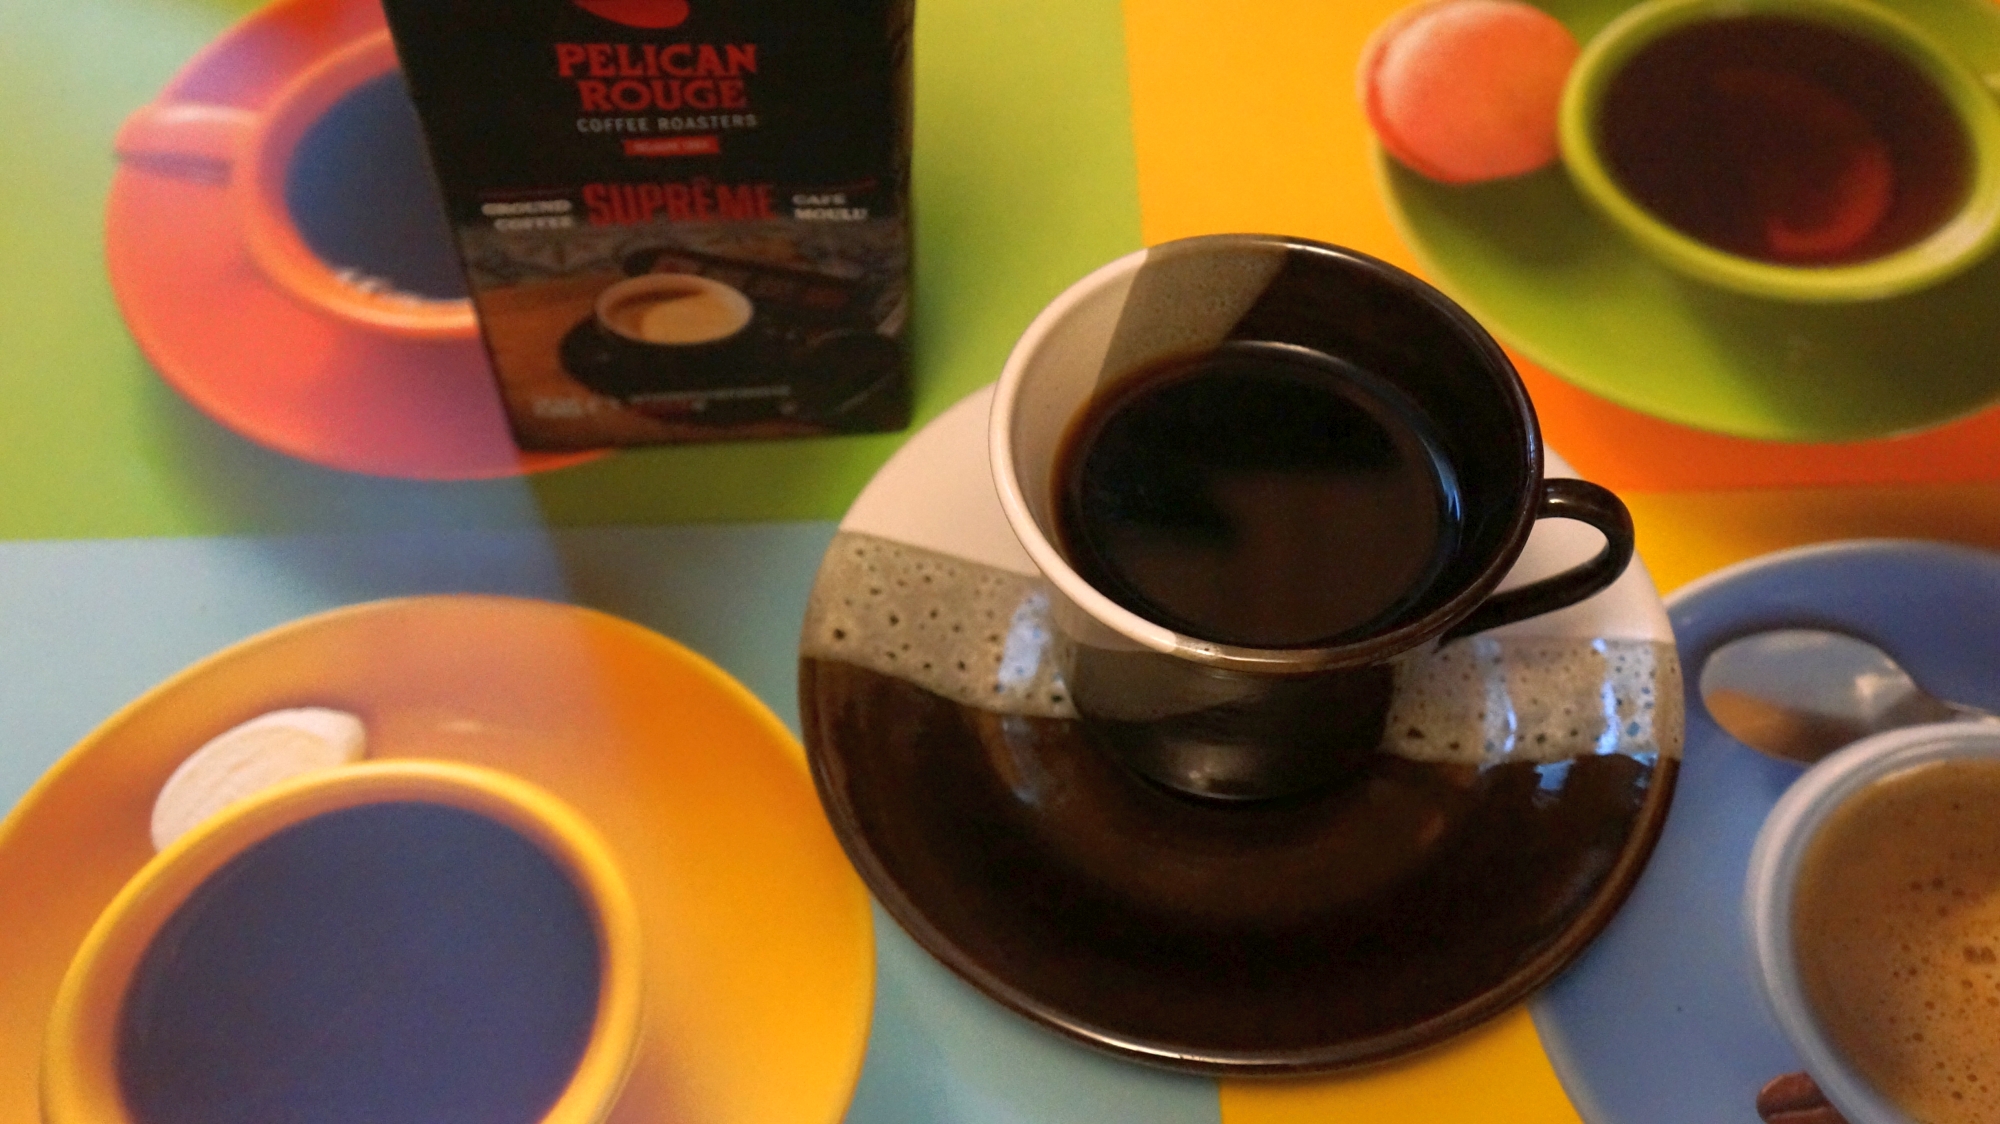 Кофе молотый Pelican Rouge Supreme